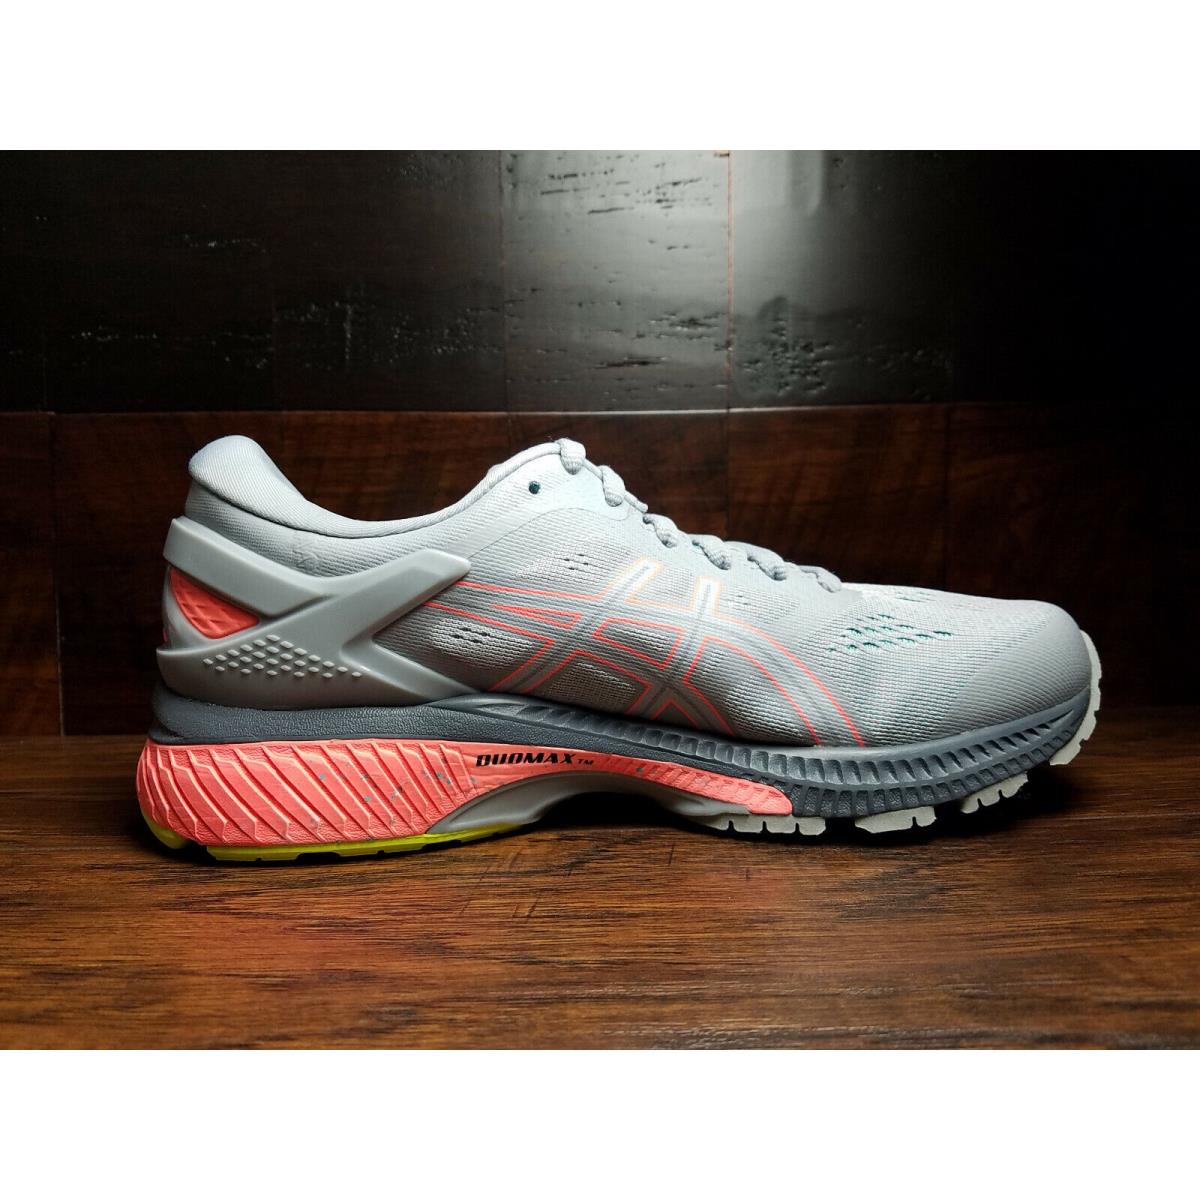 ASICS shoes  - Piedmont Grey / Coral 1